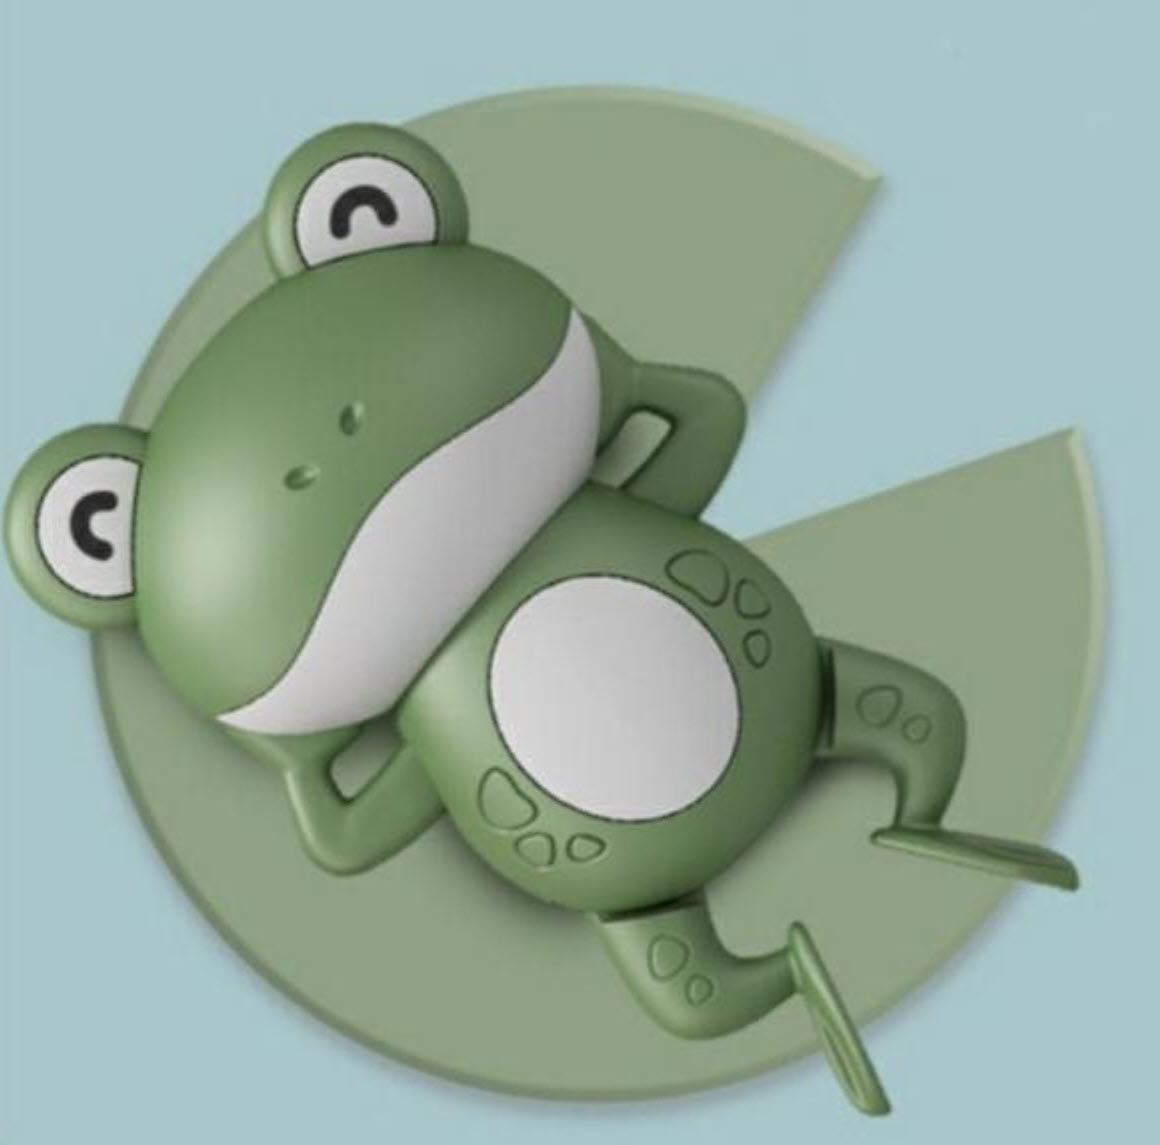 Ảnh avatar ếch